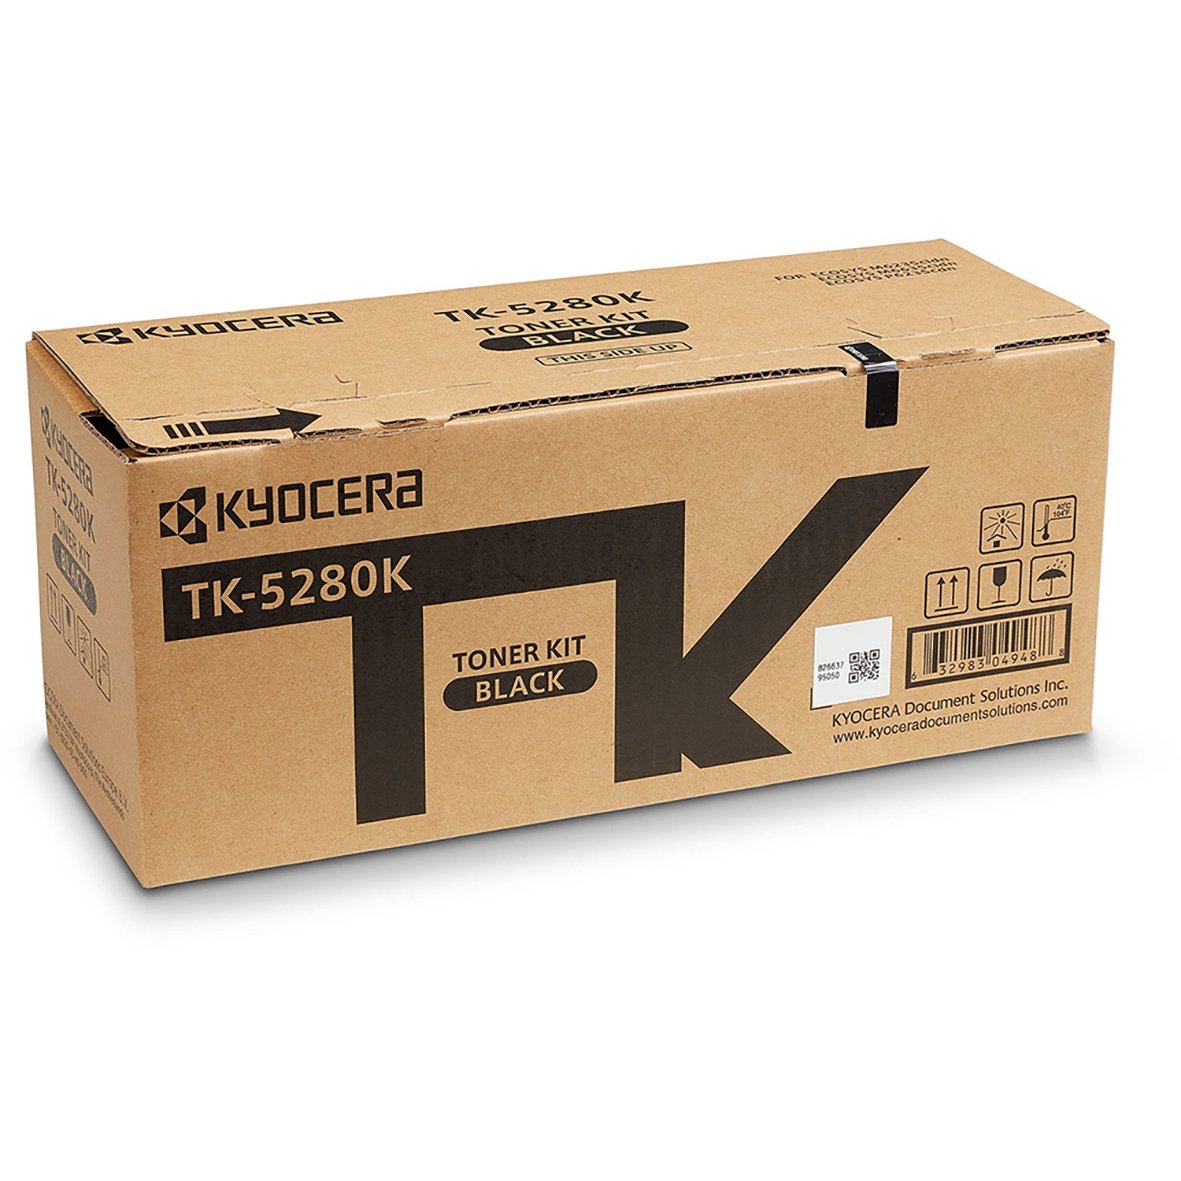 Toner Kit Kyocera 13000sid TK-5280K Svart